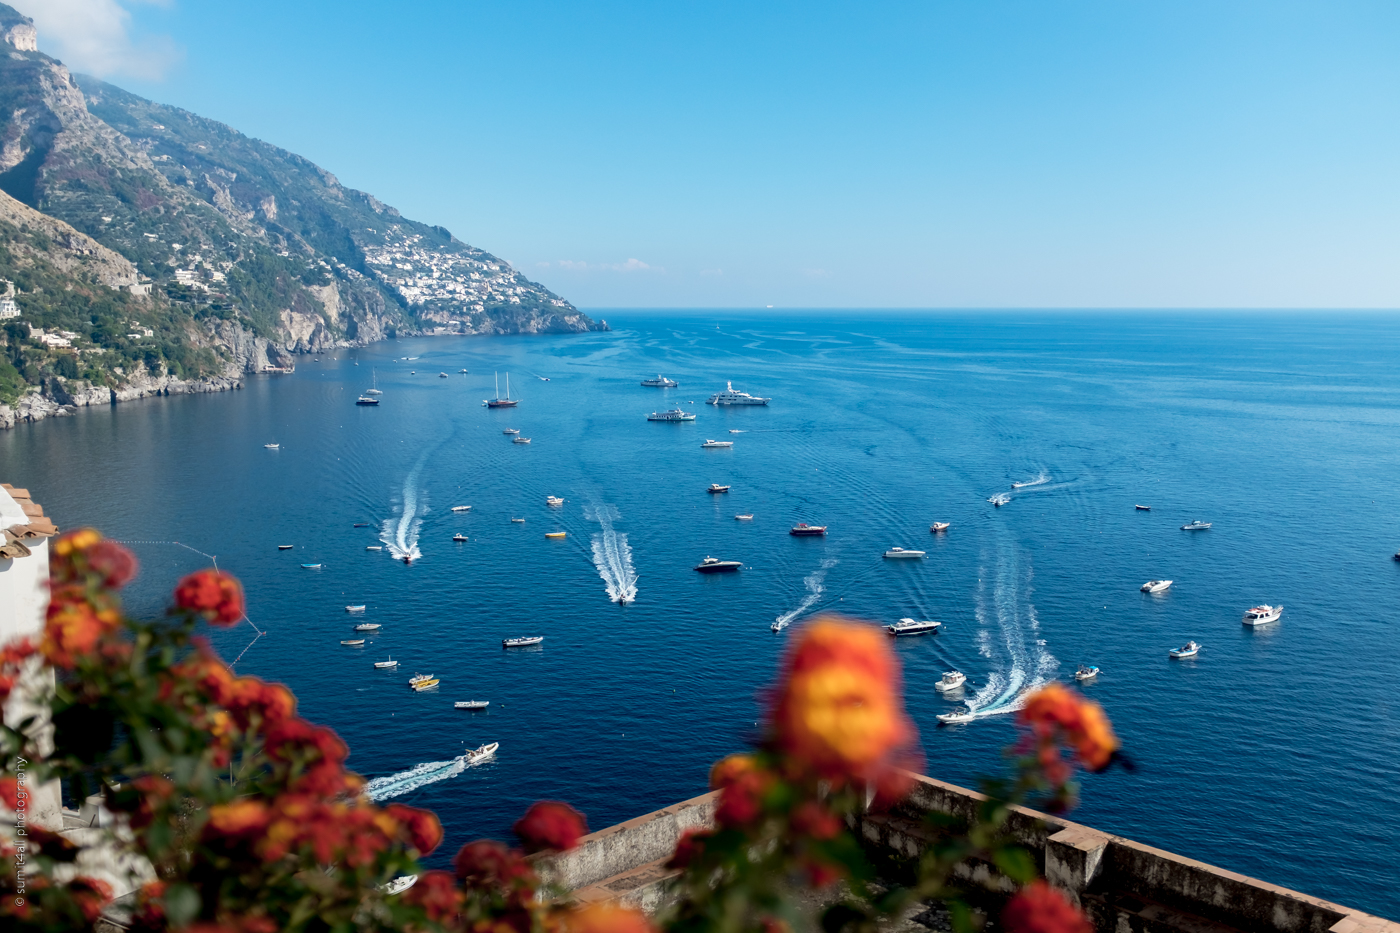 Views all around in Positano on the Amalfi Coast, Italy